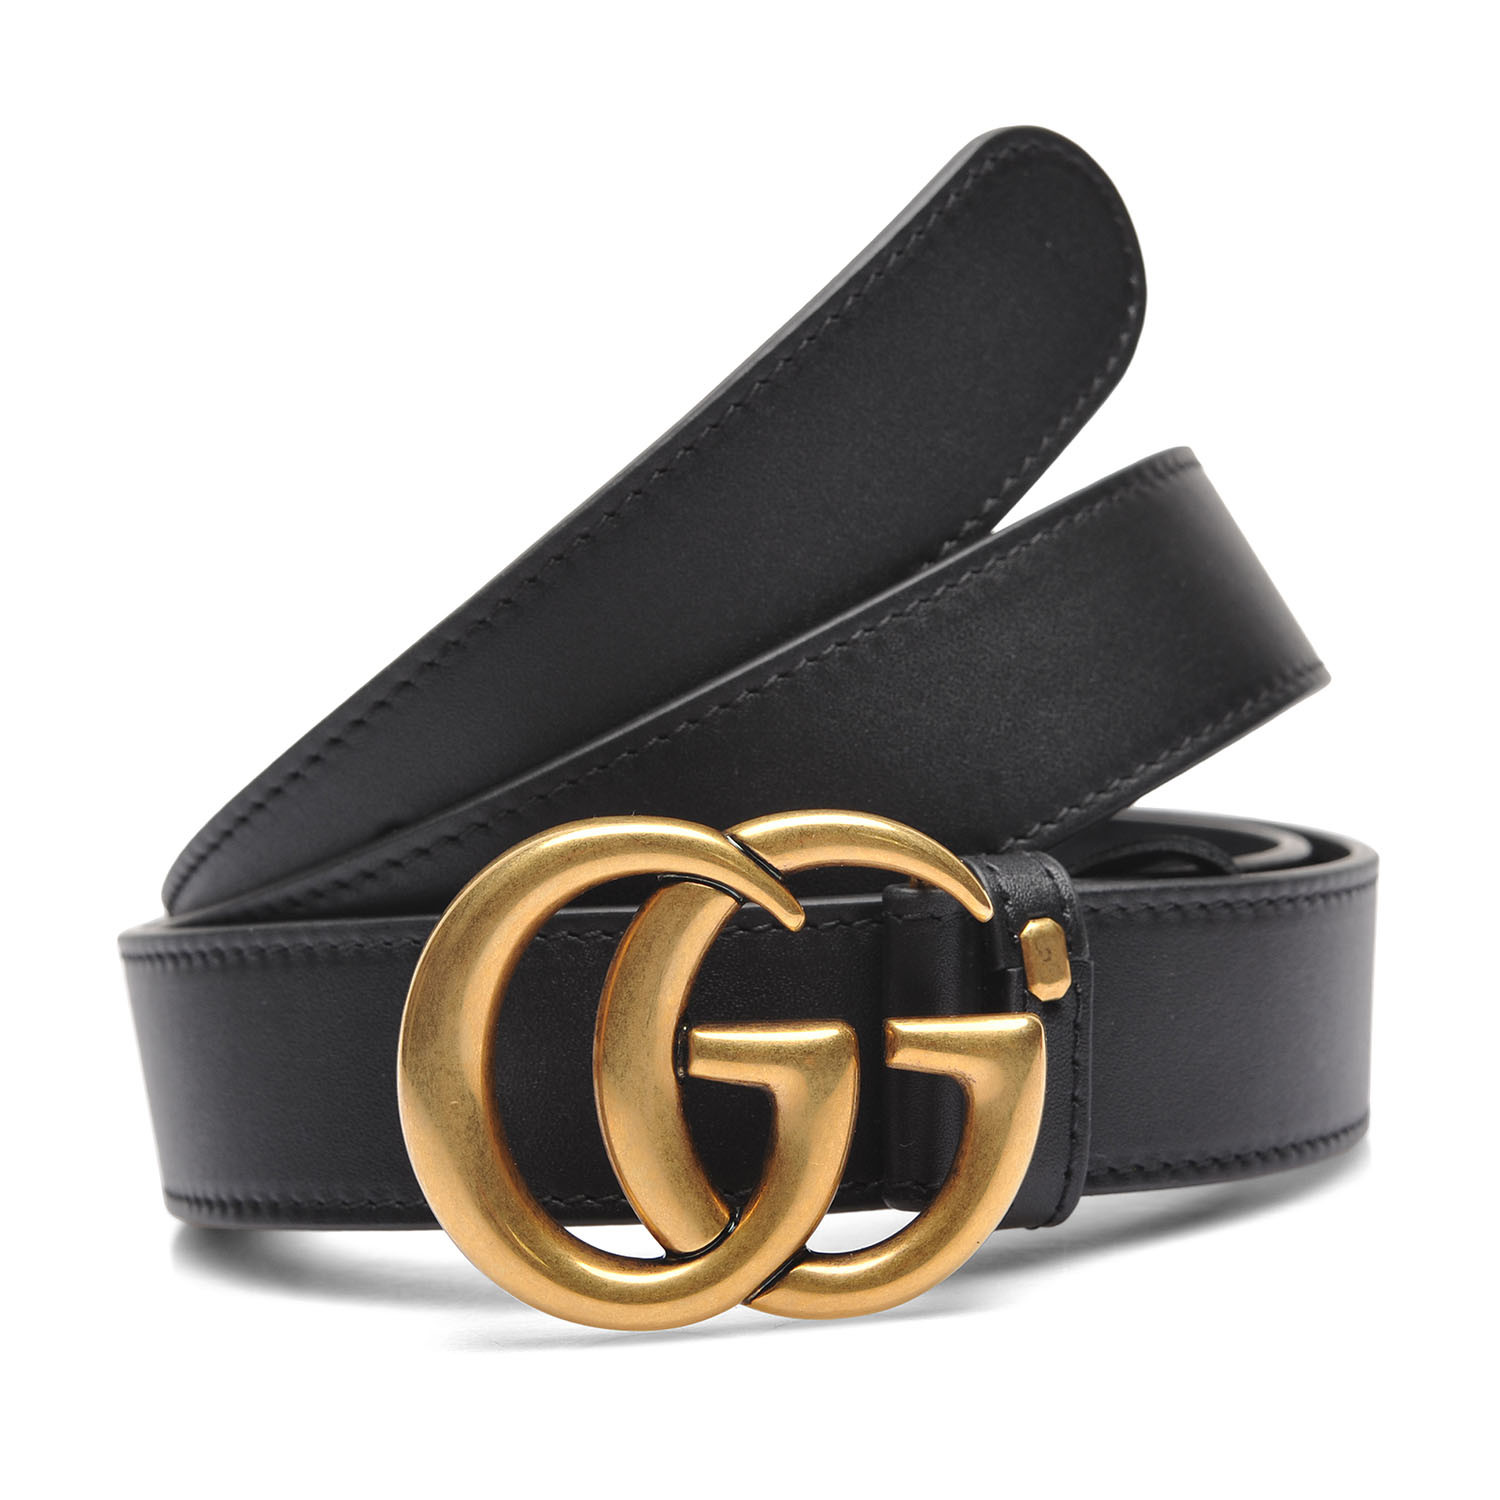 gucci belt gold black